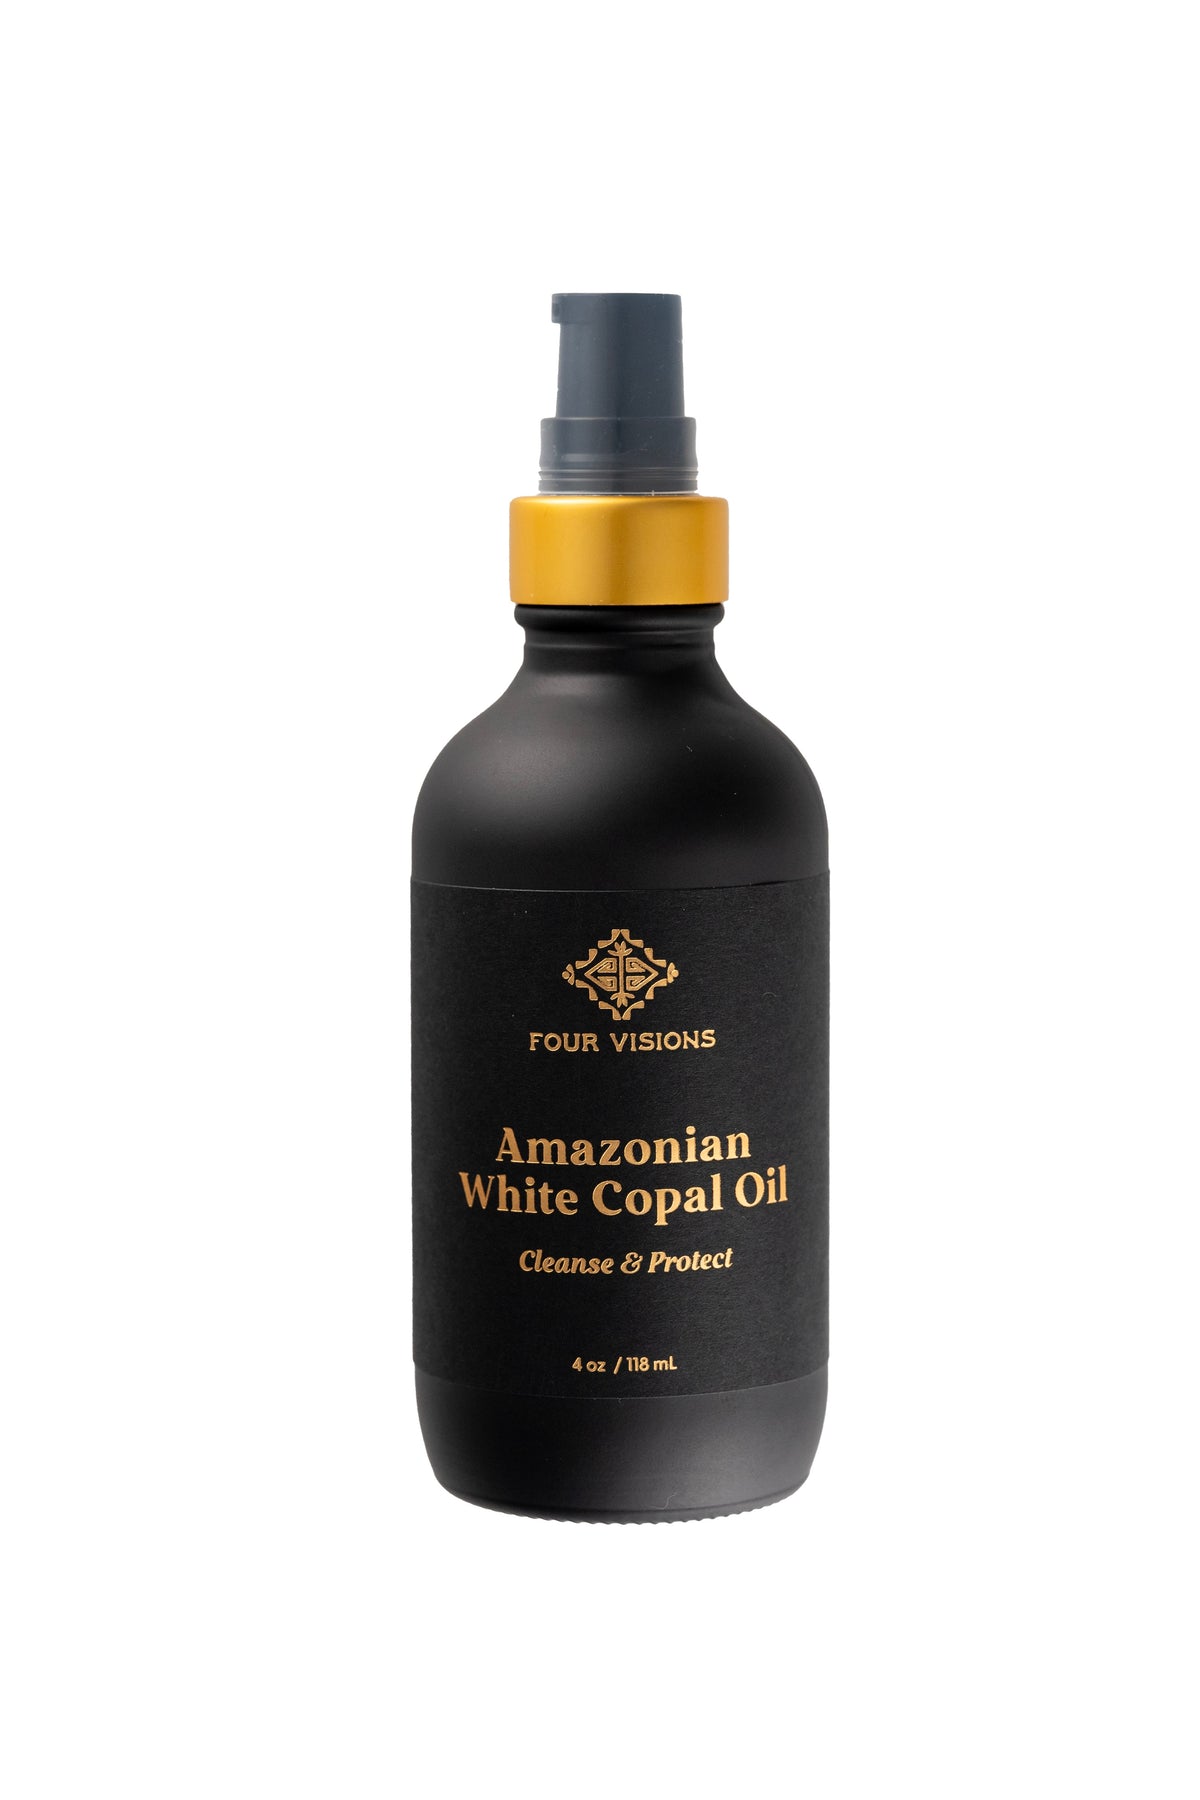 Amazonian White Copal Oil